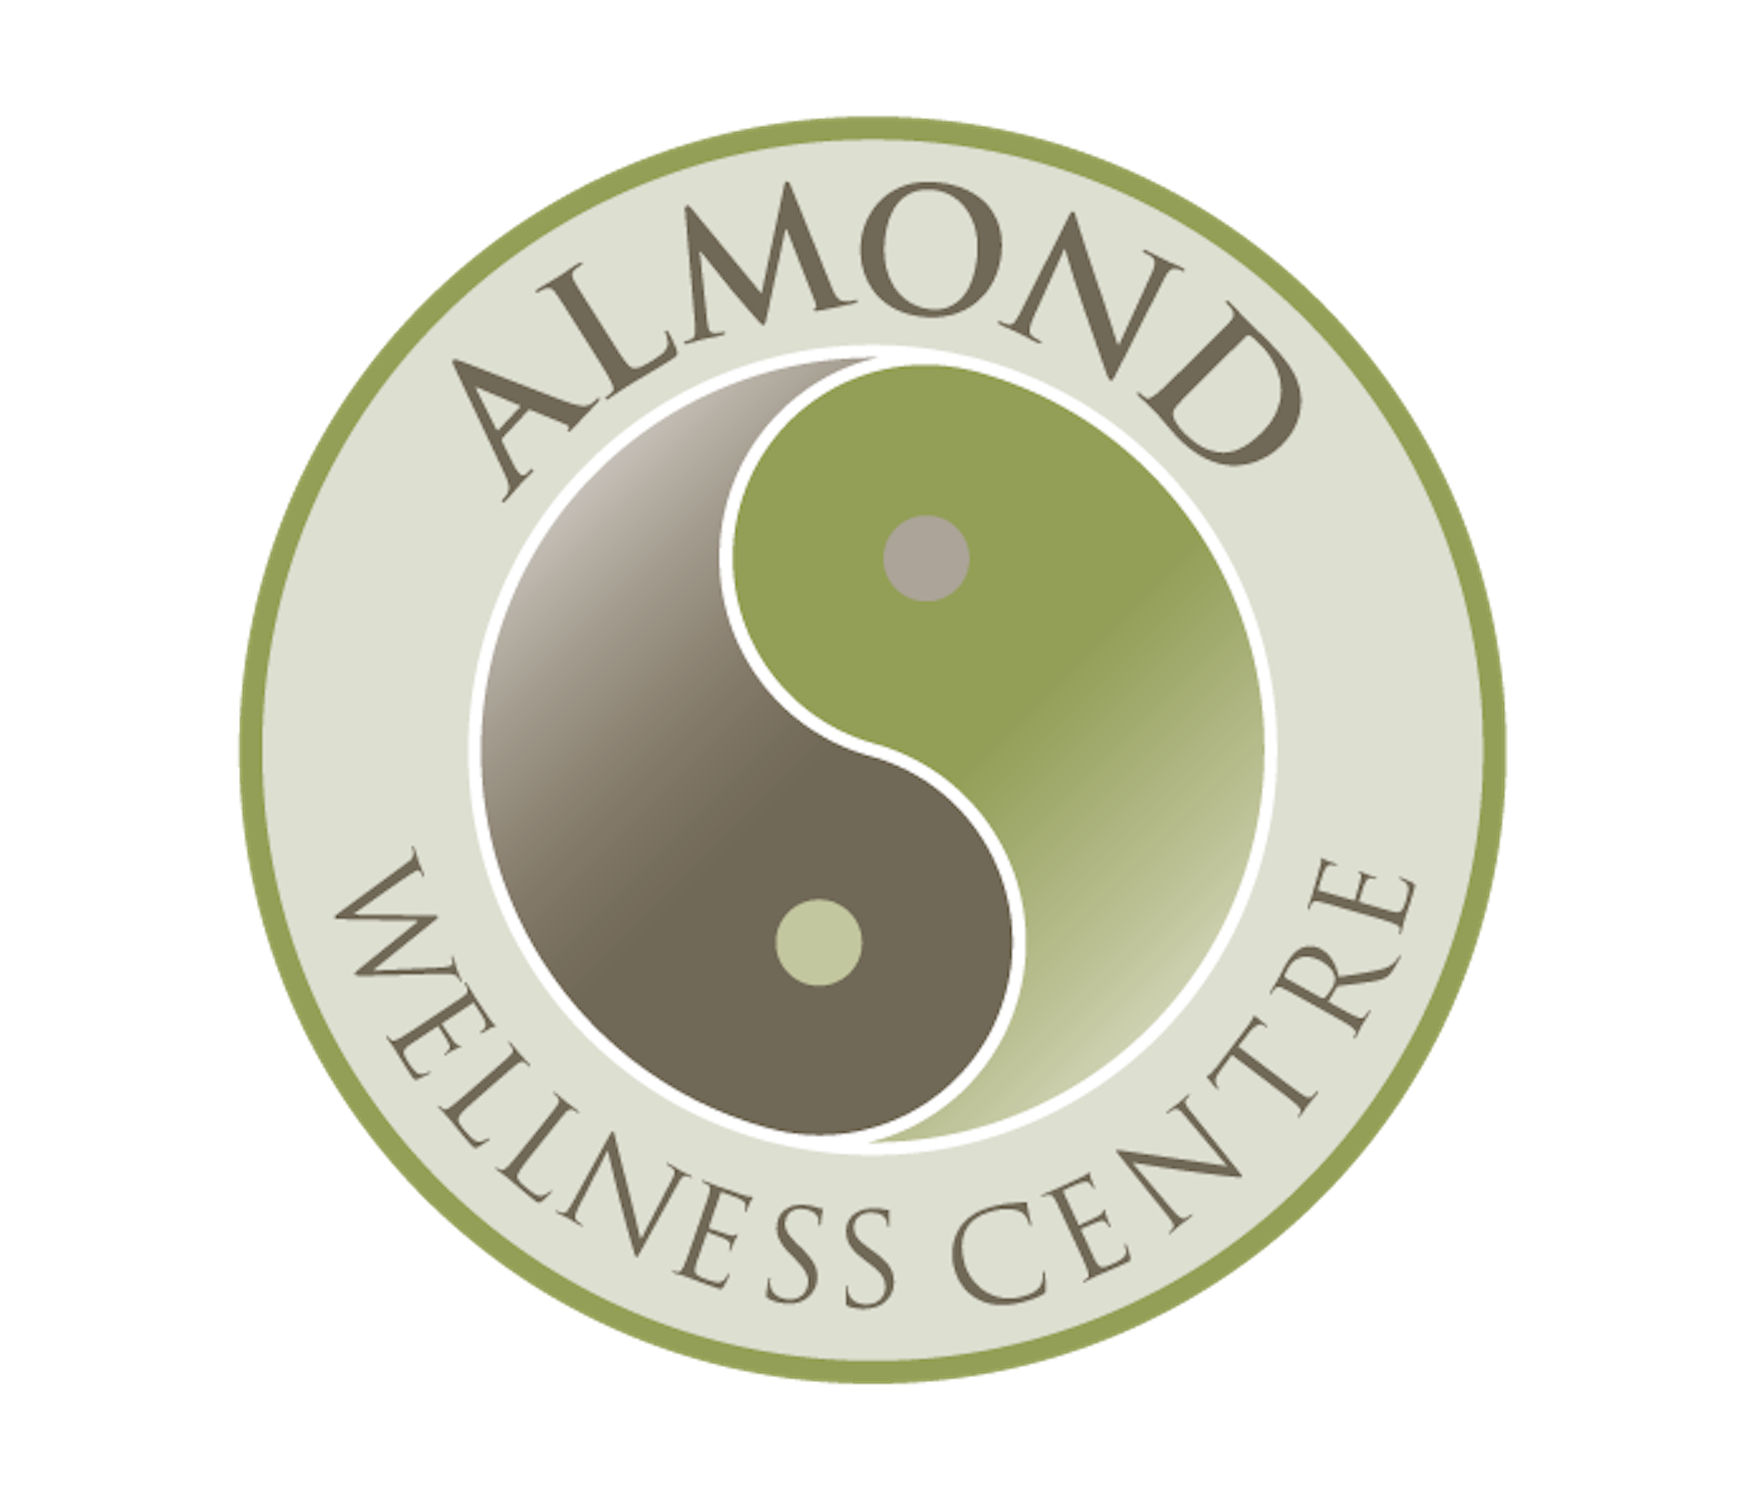 Almond Wellness Centre